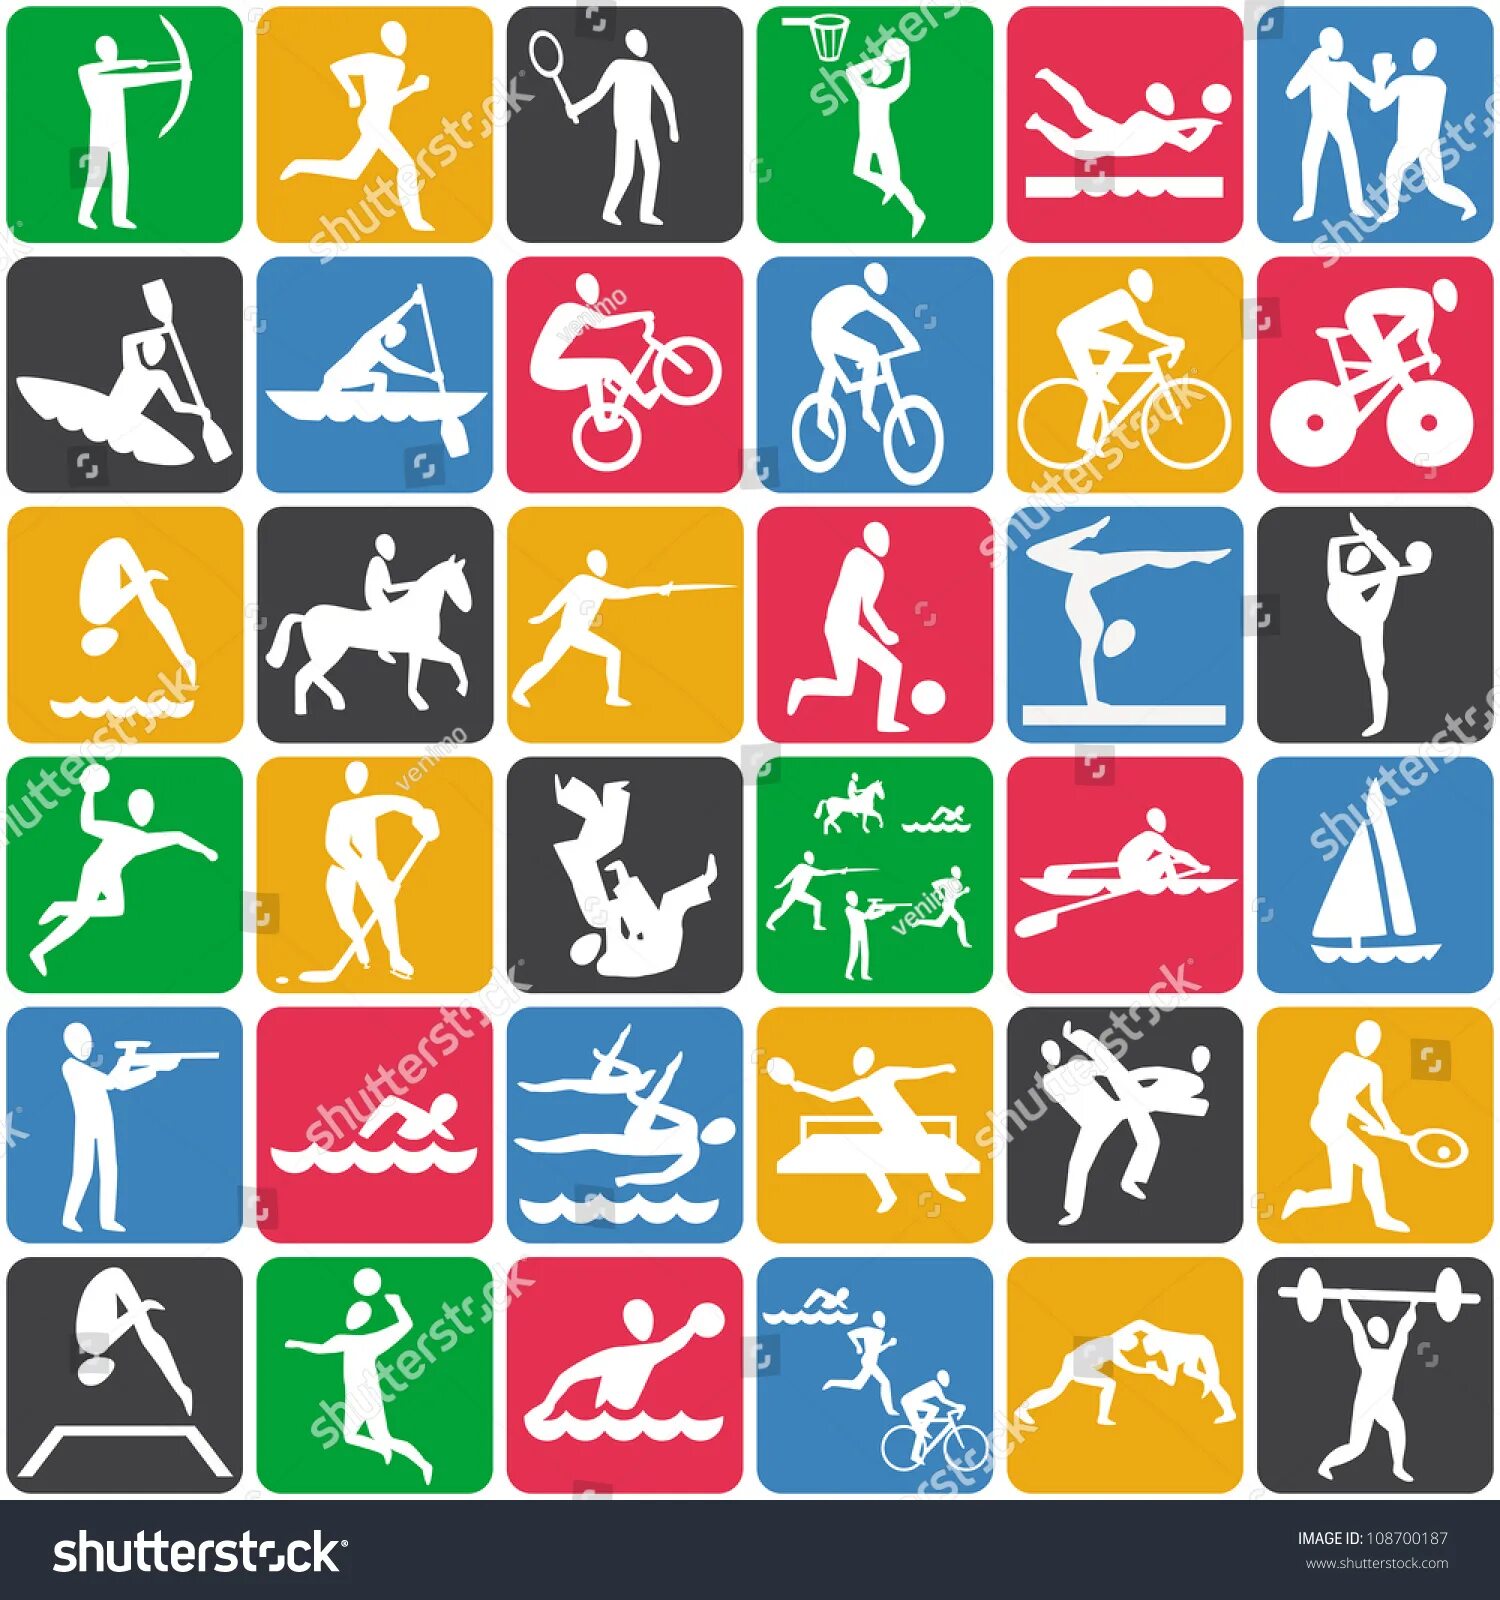 Sports icons. Значки видов спорта. Спортивные символы. Символы видов спорта. Спортивные логотипы видов спорта.